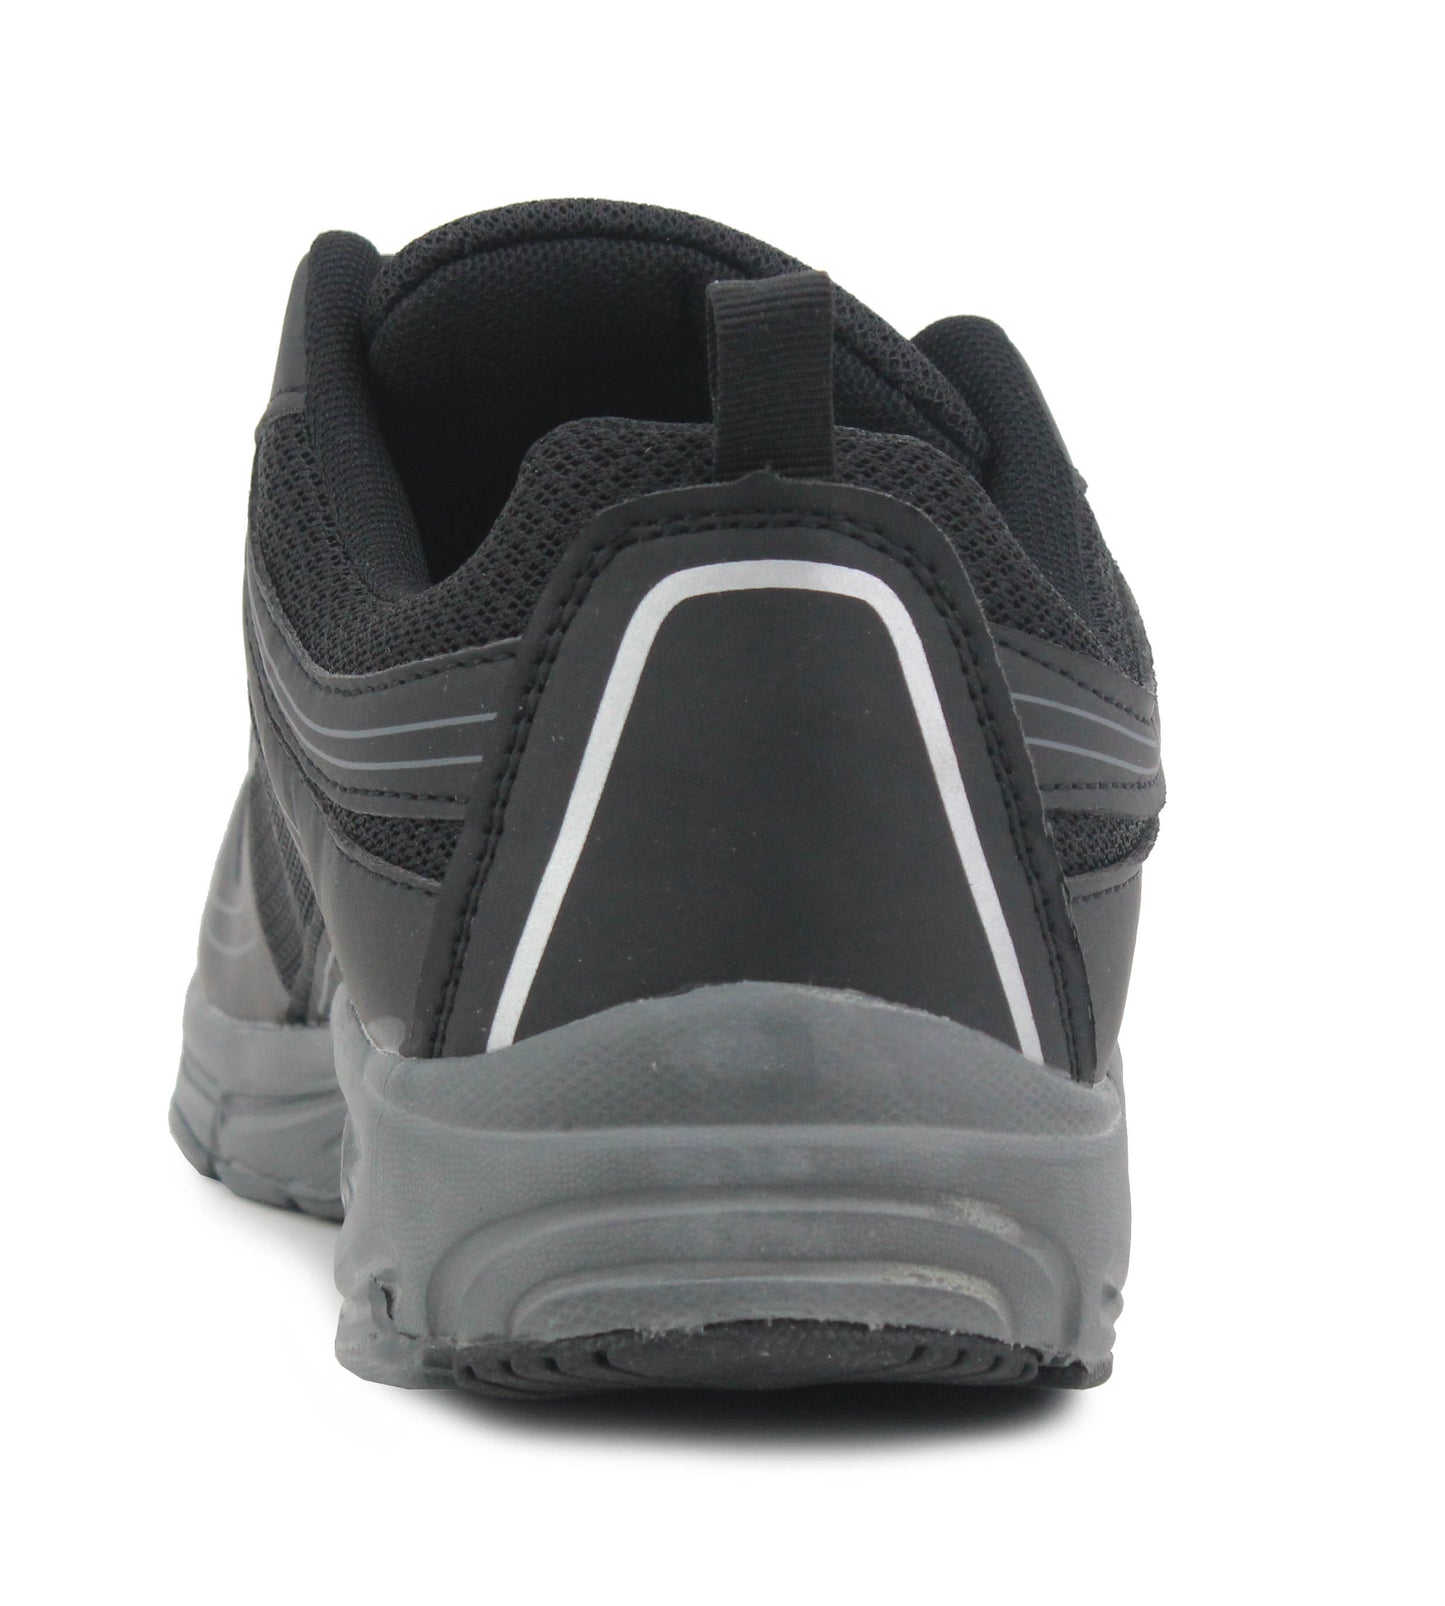 Dek Mens Super Lightweight Memory Foam Twin Touch Fasten Breathable Mesh Casual Sneaker Pumps Trainers